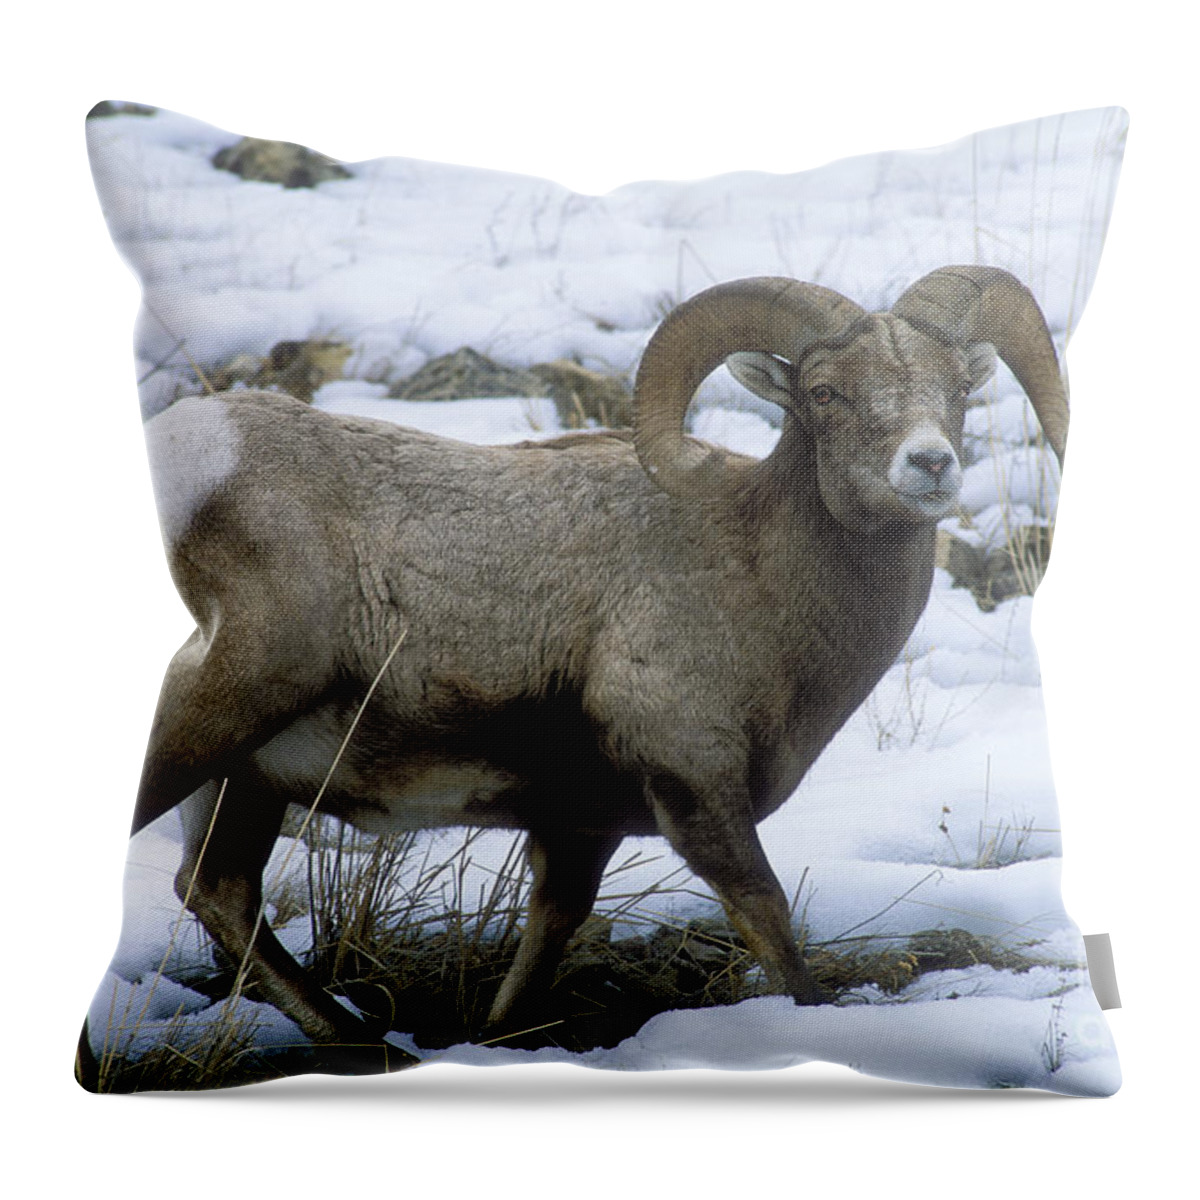 Sandra Throw Pillow featuring the photograph Yellowstone Big Horn Sheep by Sandra Bronstein